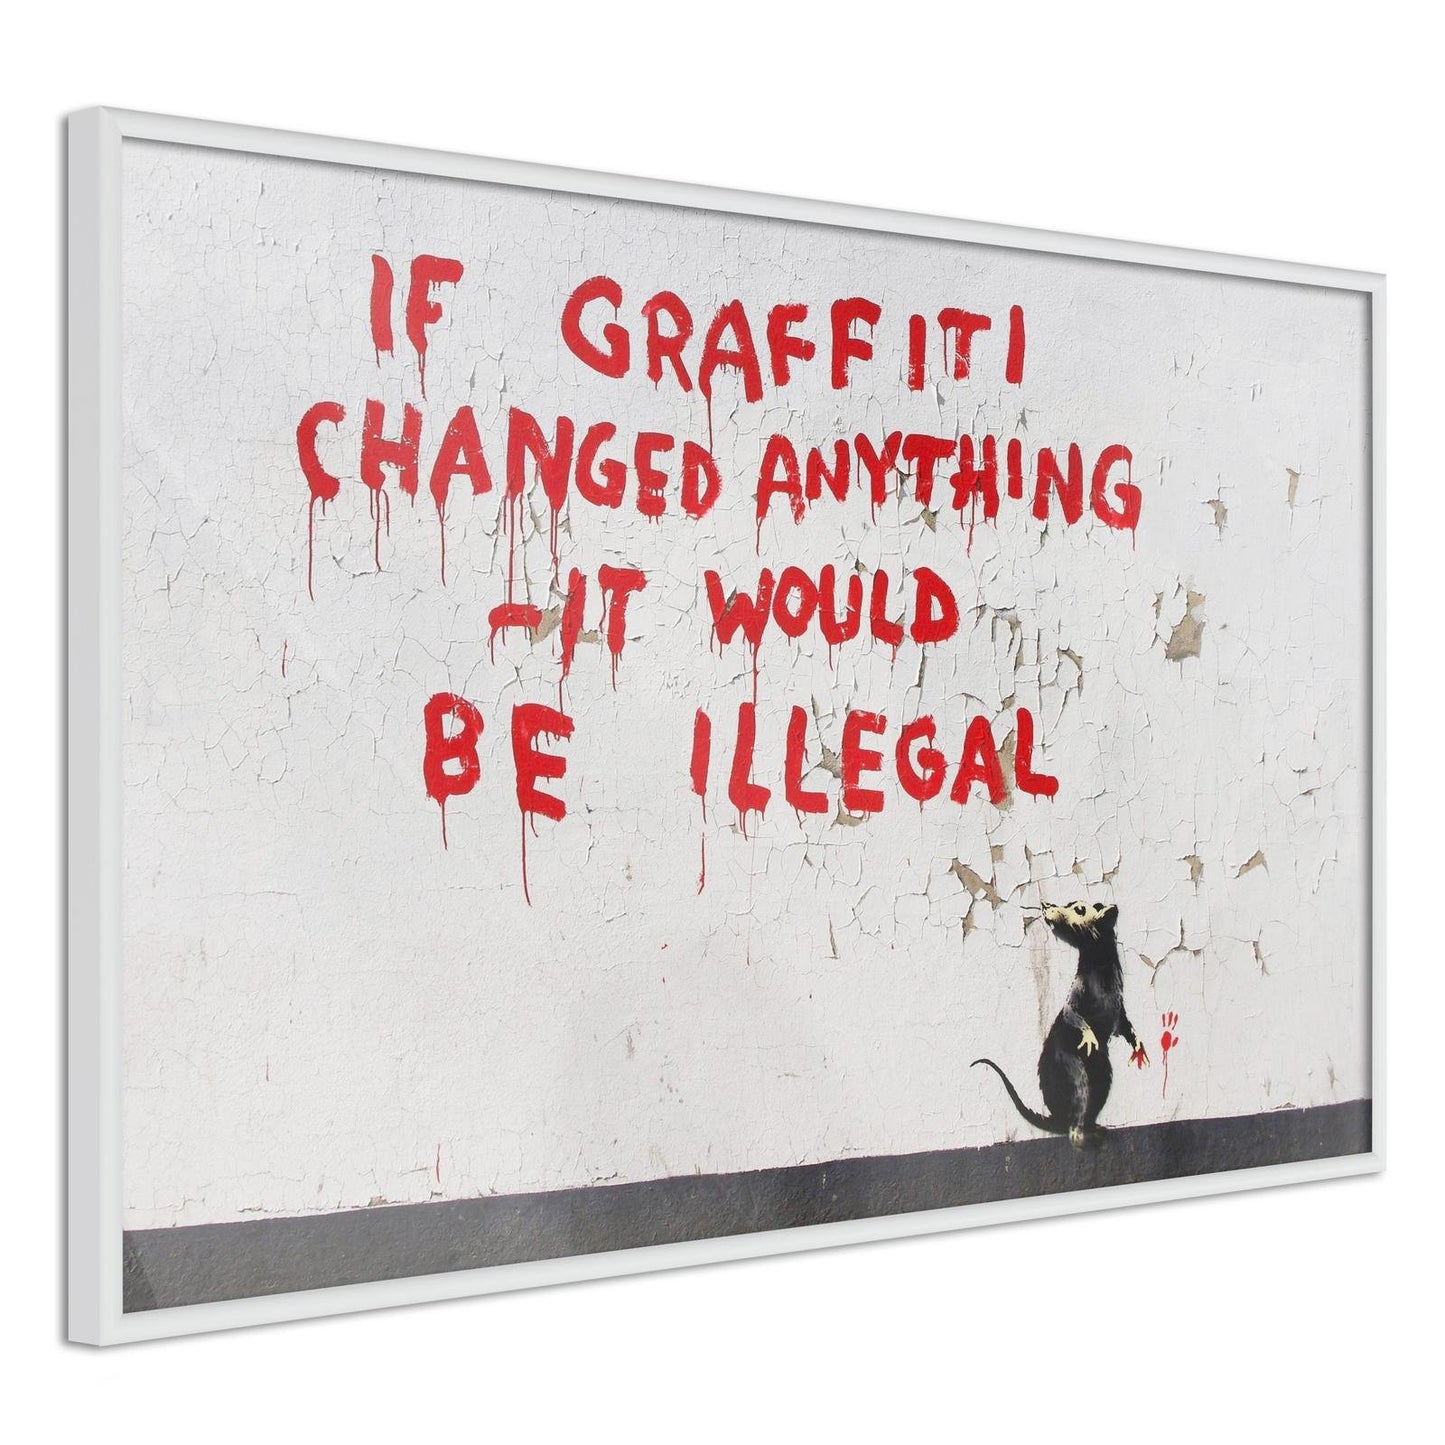 Banksy: Wenn Graffiti etwas verändern würde